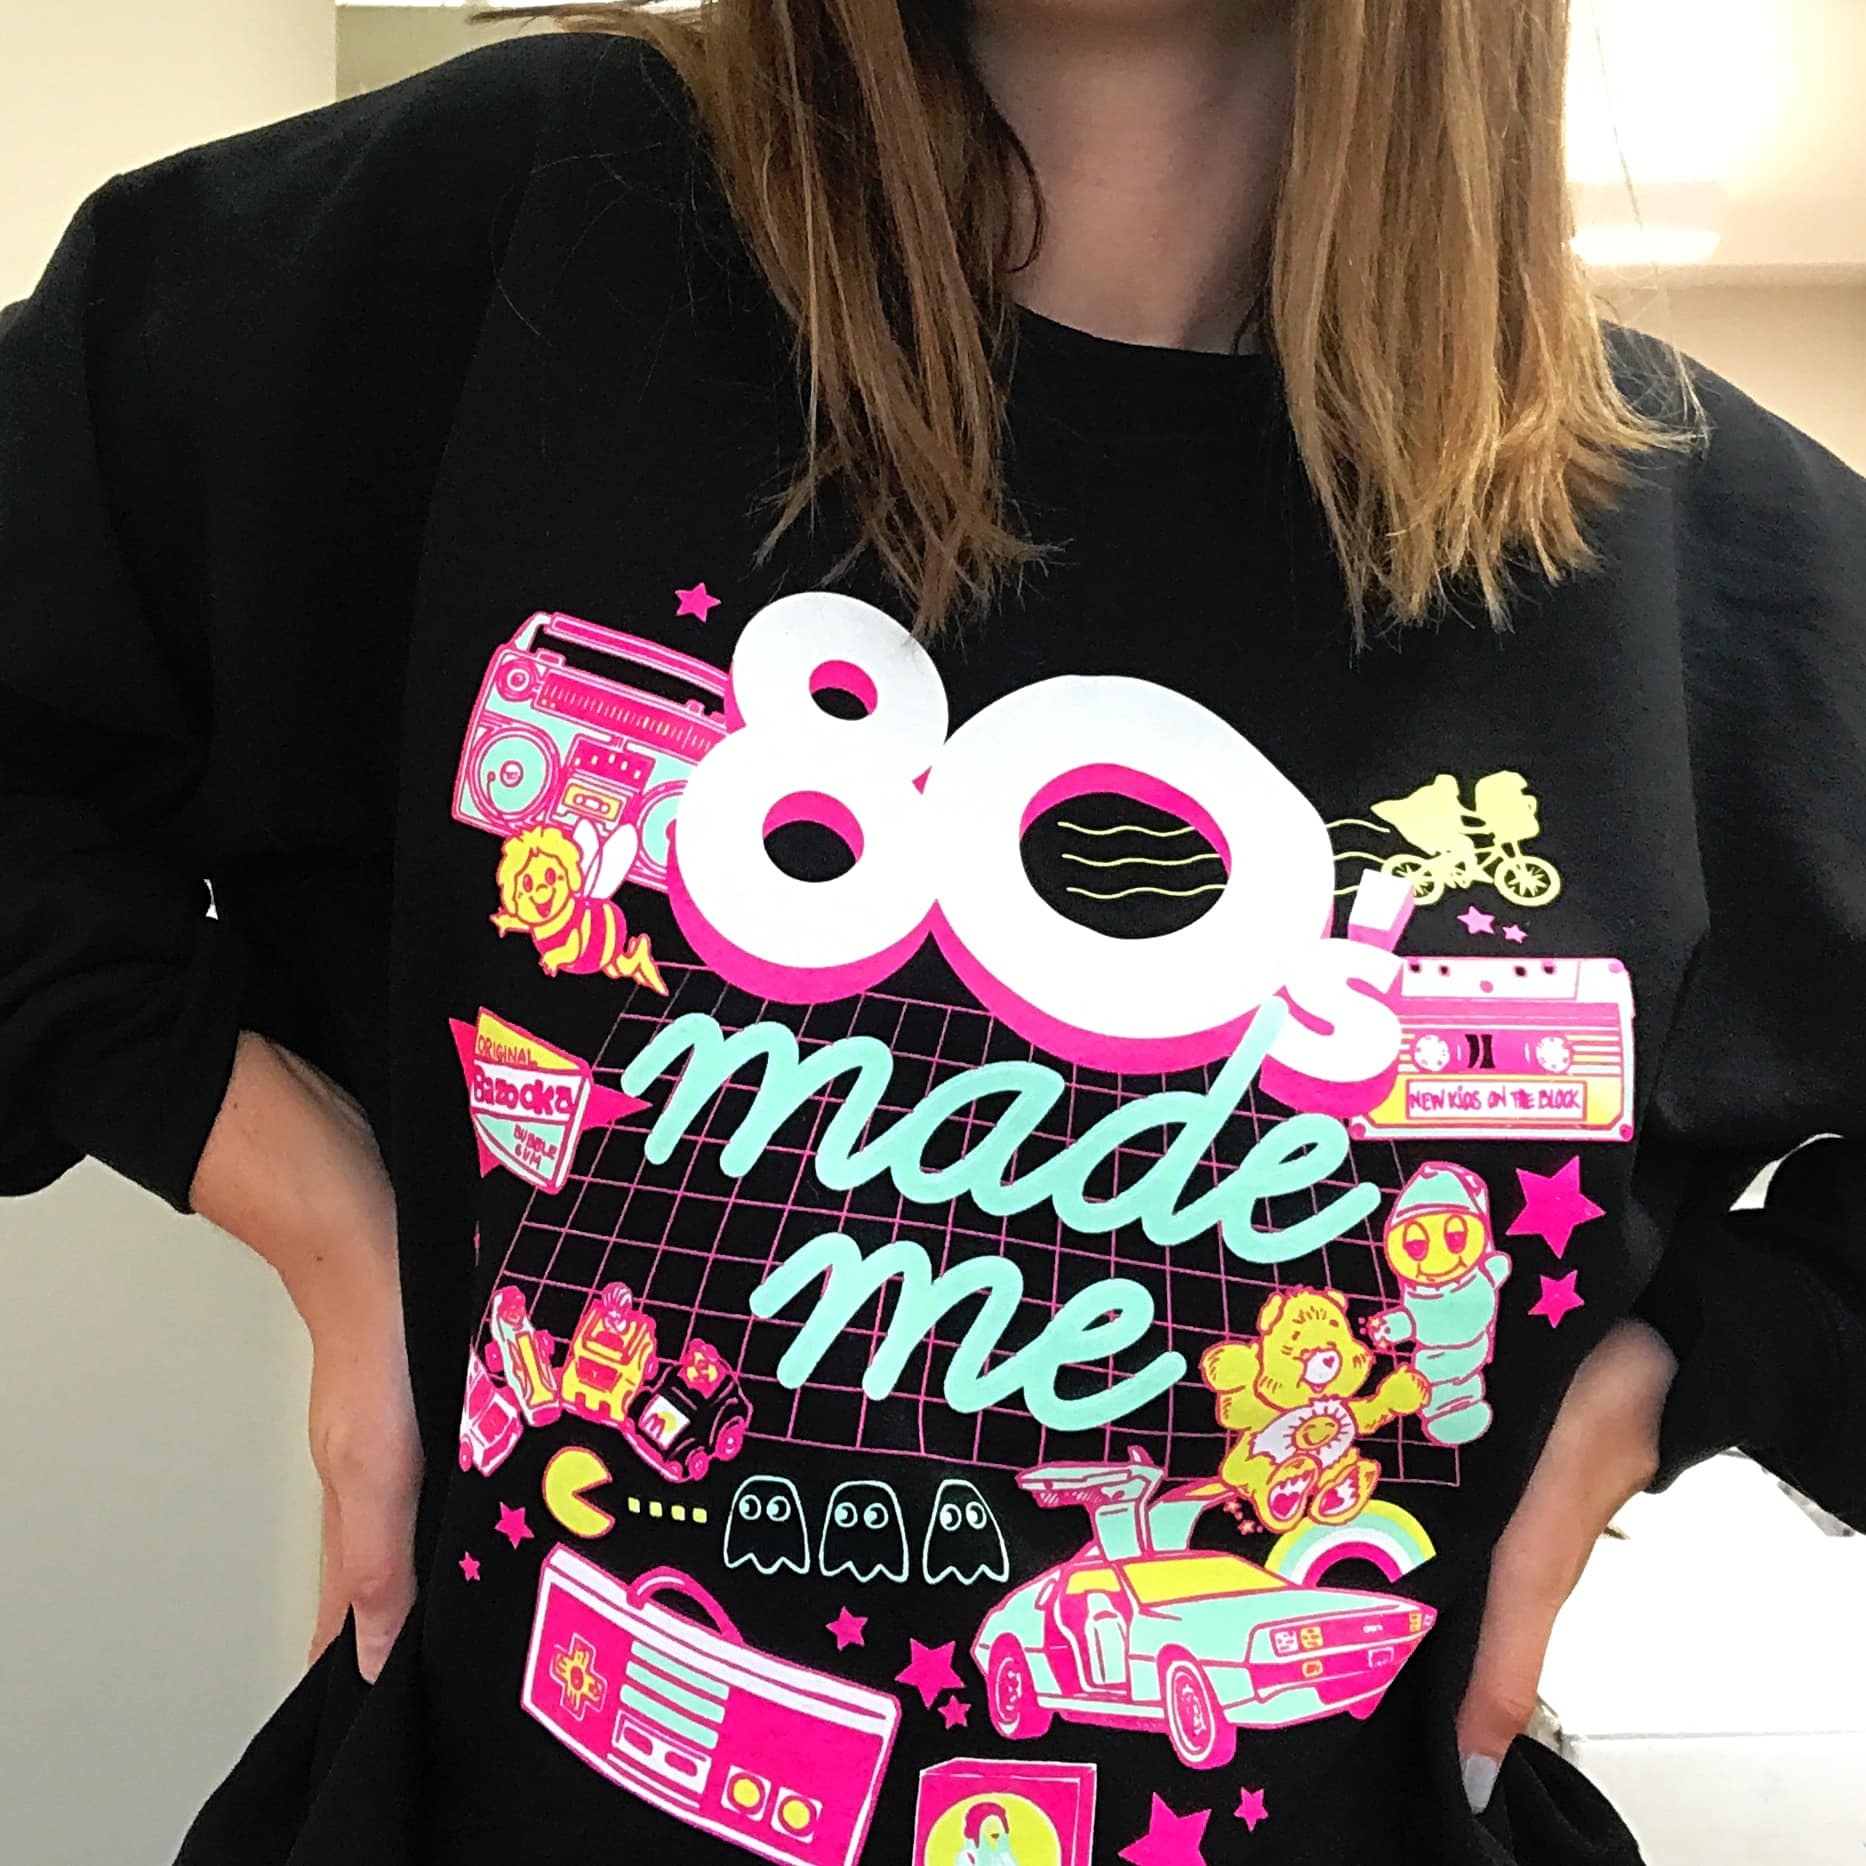 80’s made me – sweatshirt